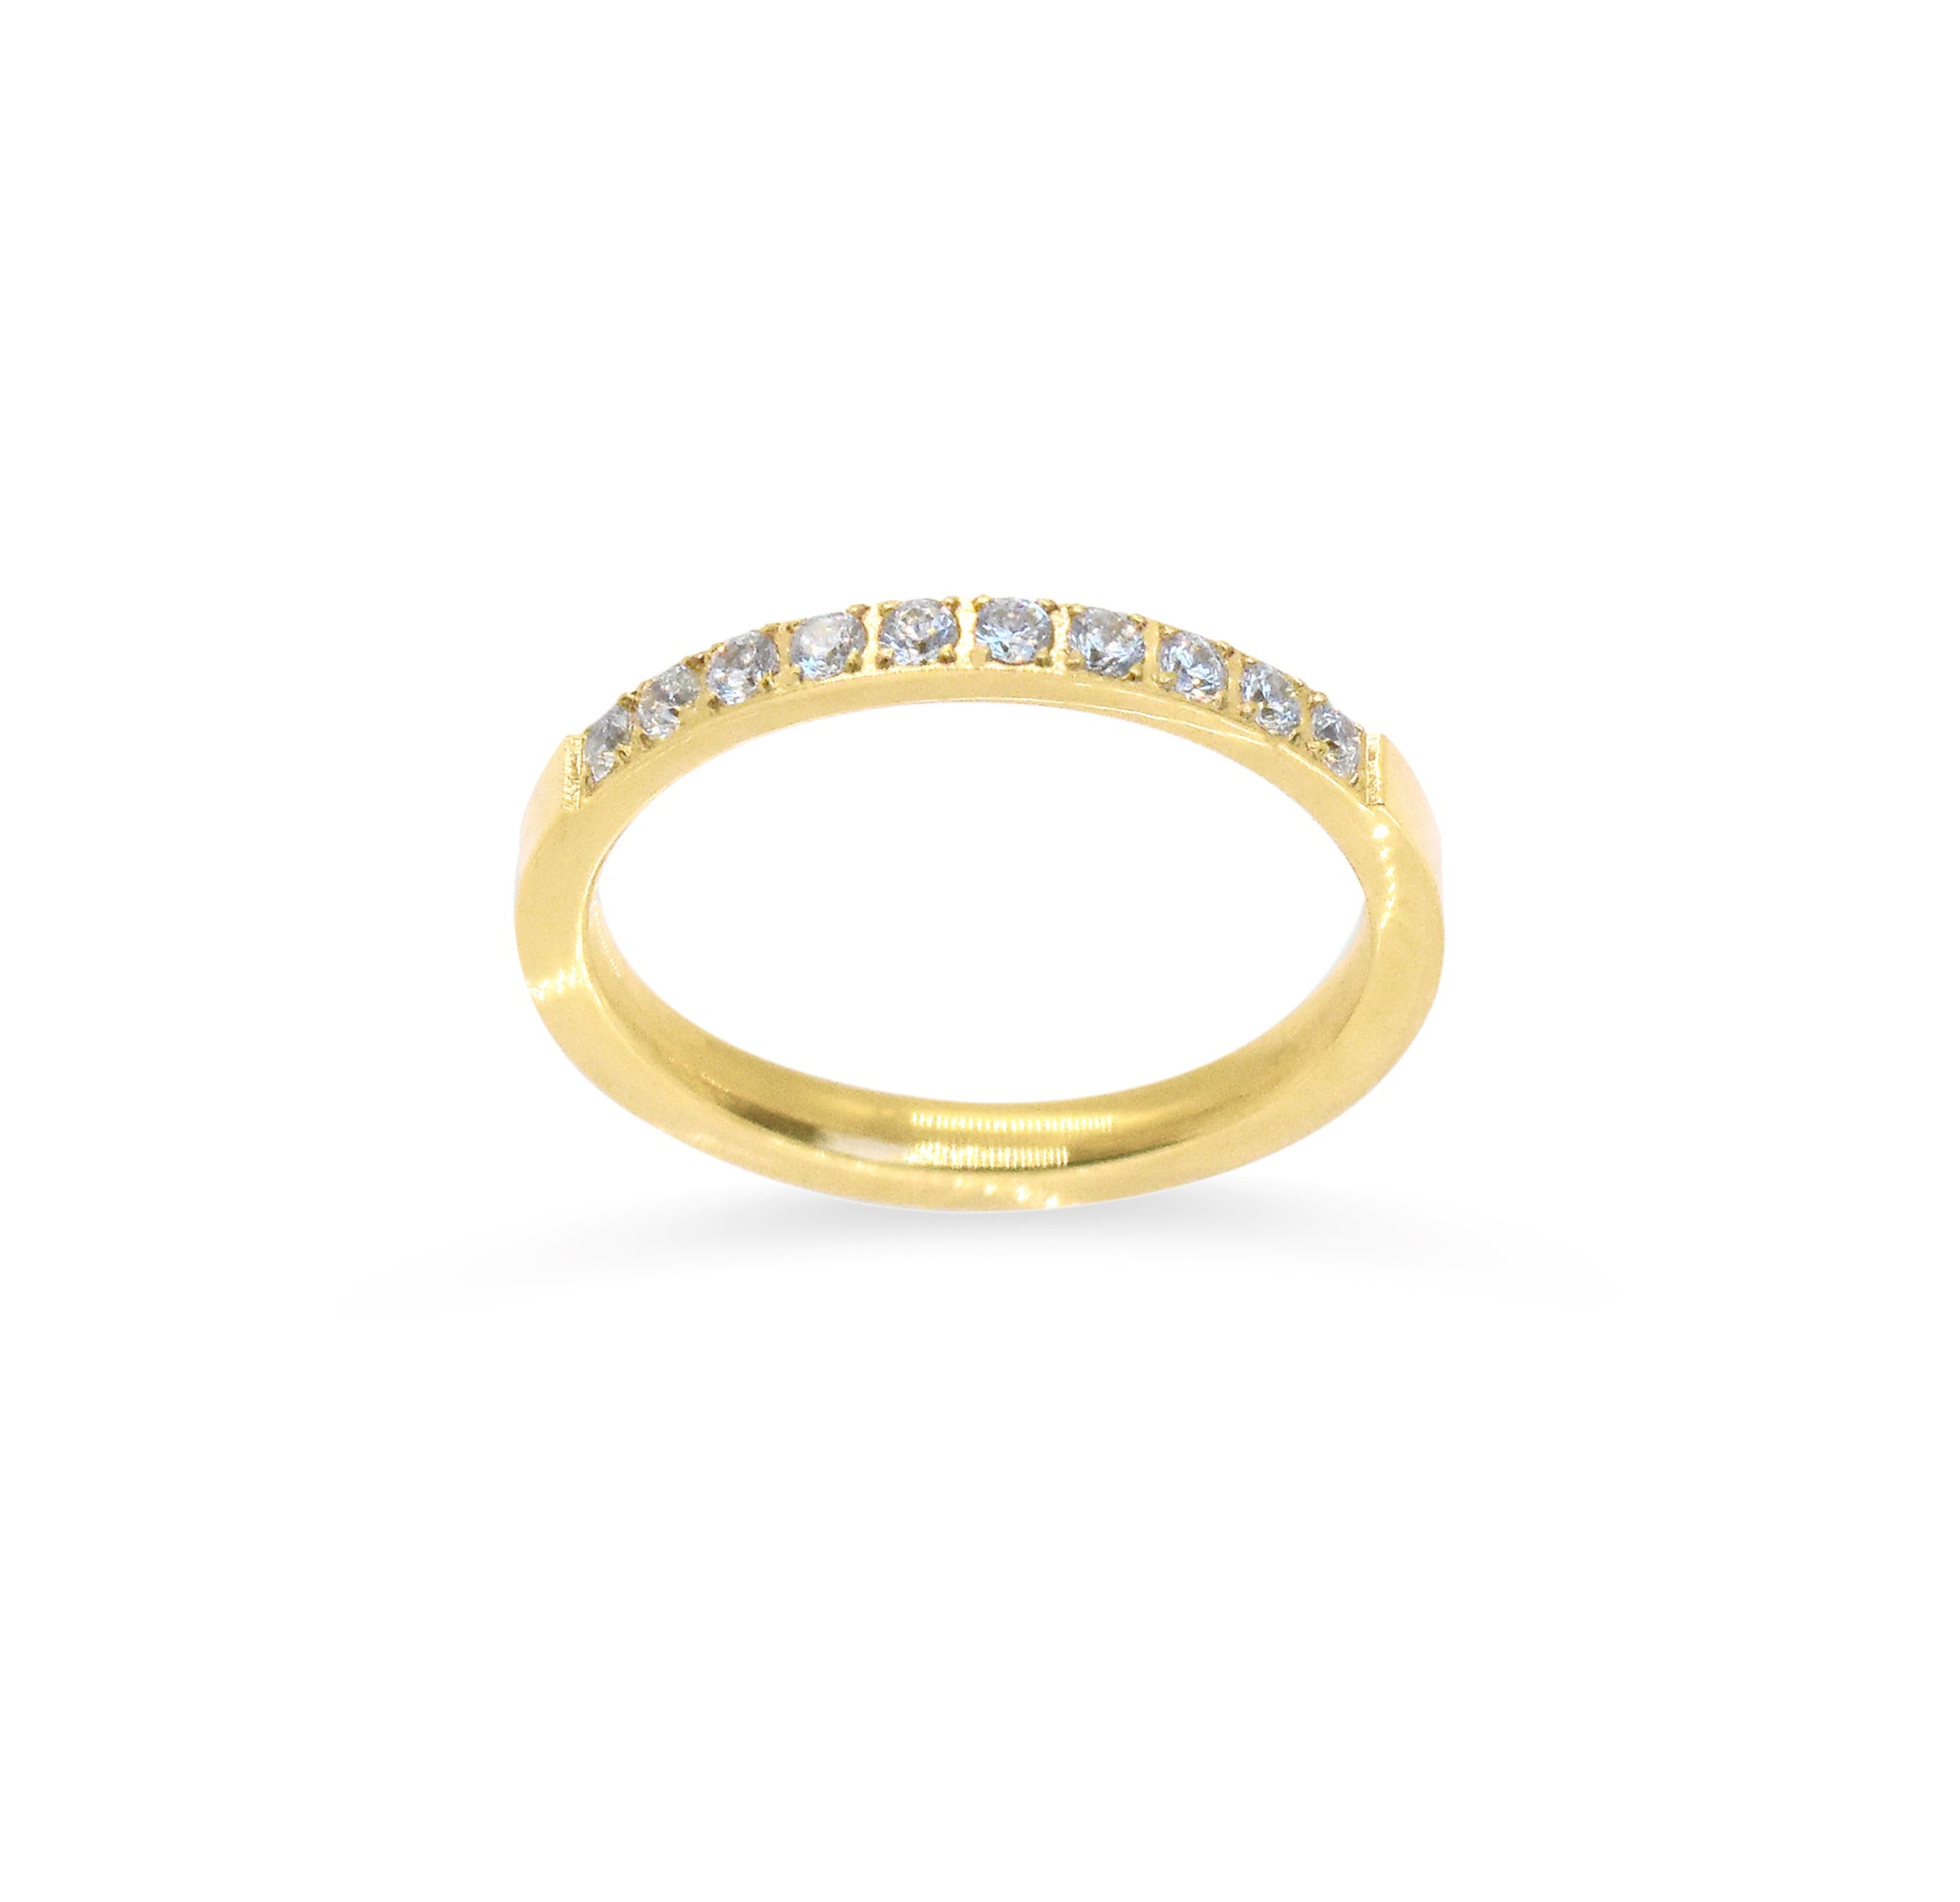 Stella gold half eternity ring band waterproof jewelry